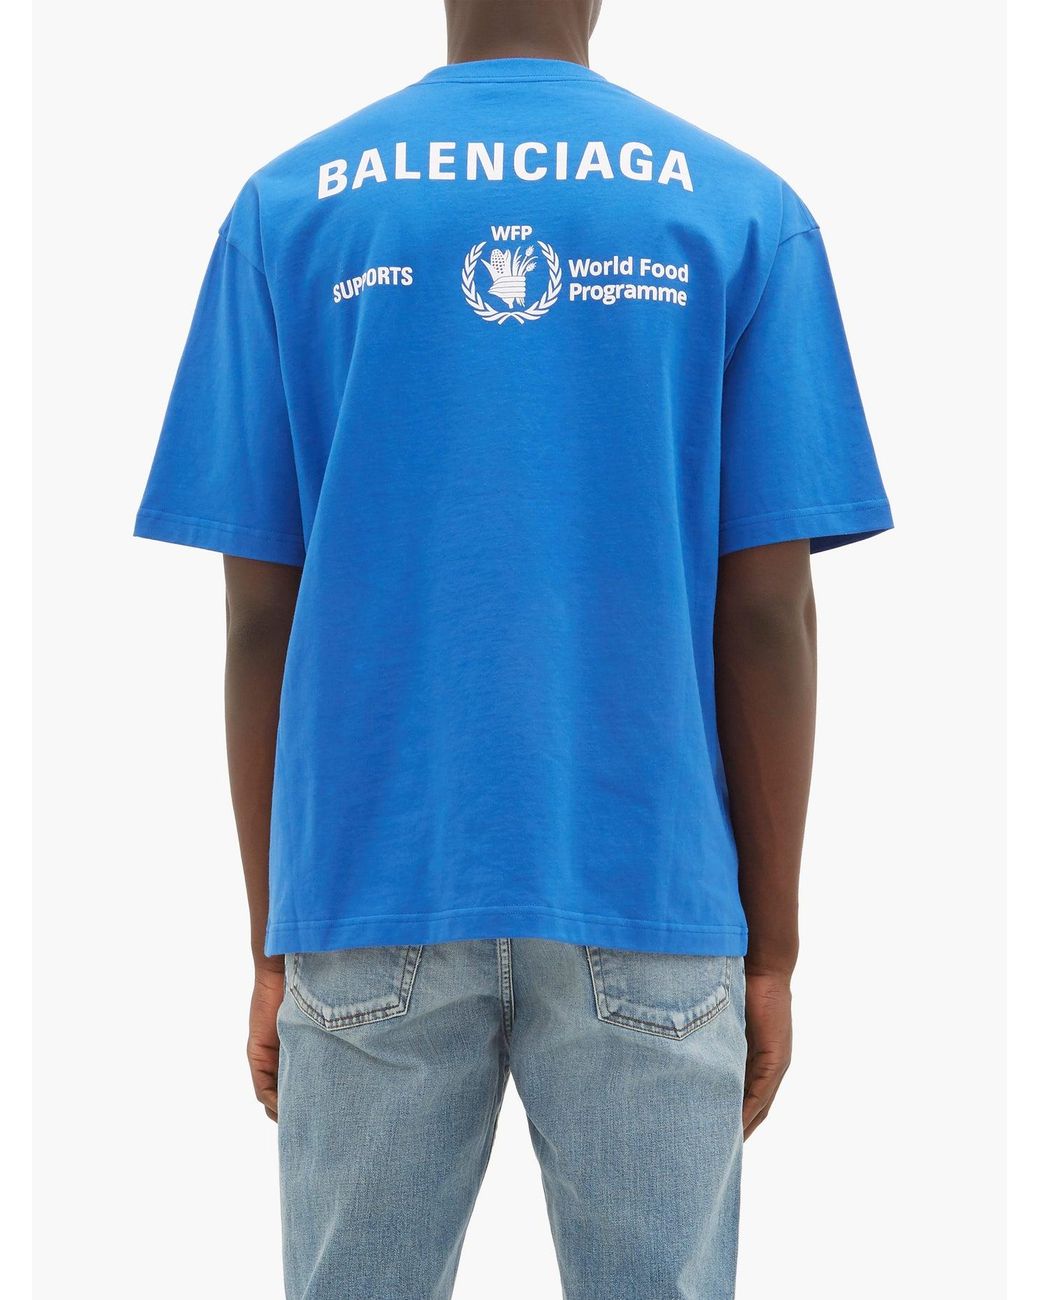 Balenciaga  World Food Programme Printed CottonJersey TShirt  Blue  Balenciaga